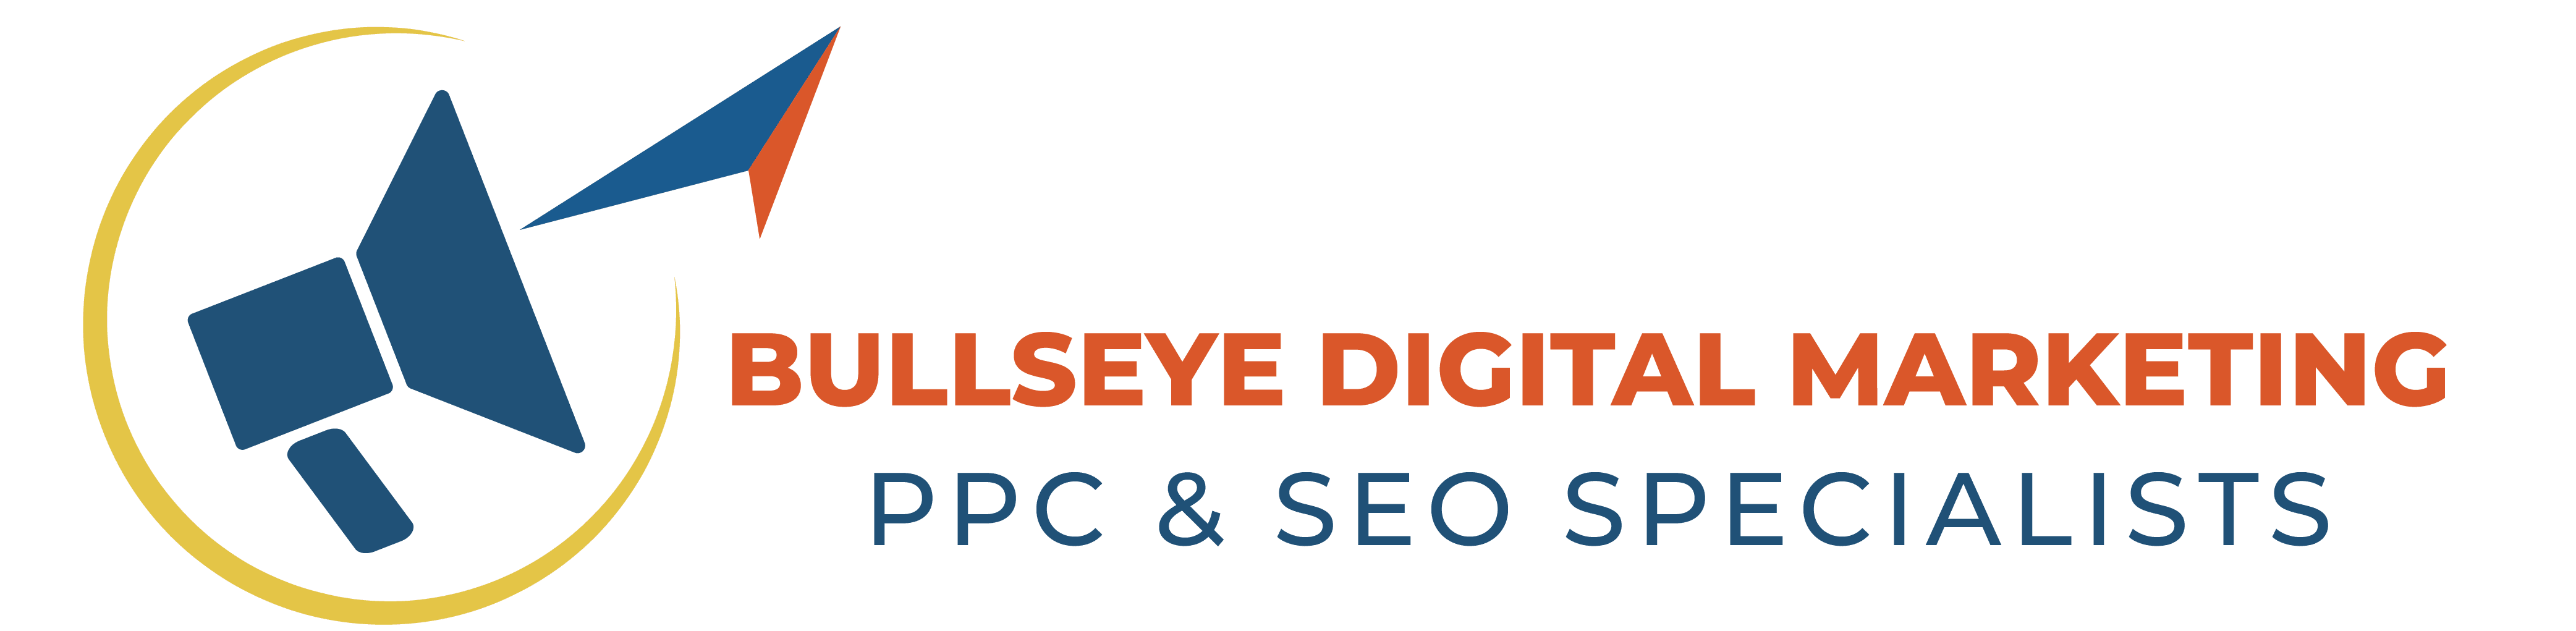 11. Bullseye Digital Marketing PPC & SEO